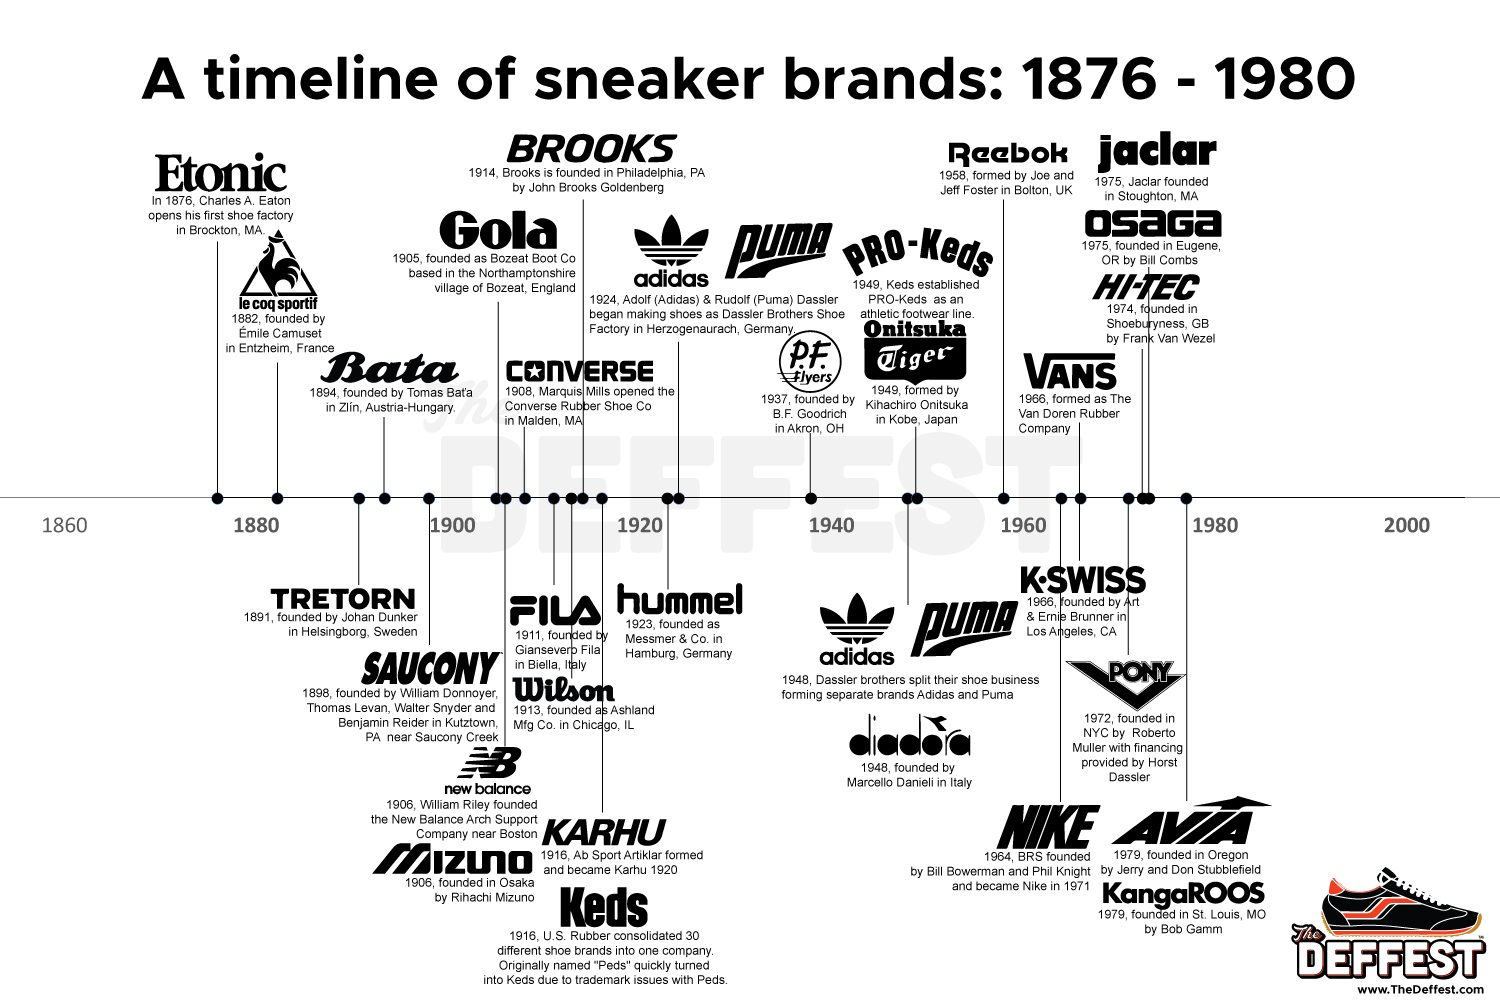 A timeline of sneaker brands 